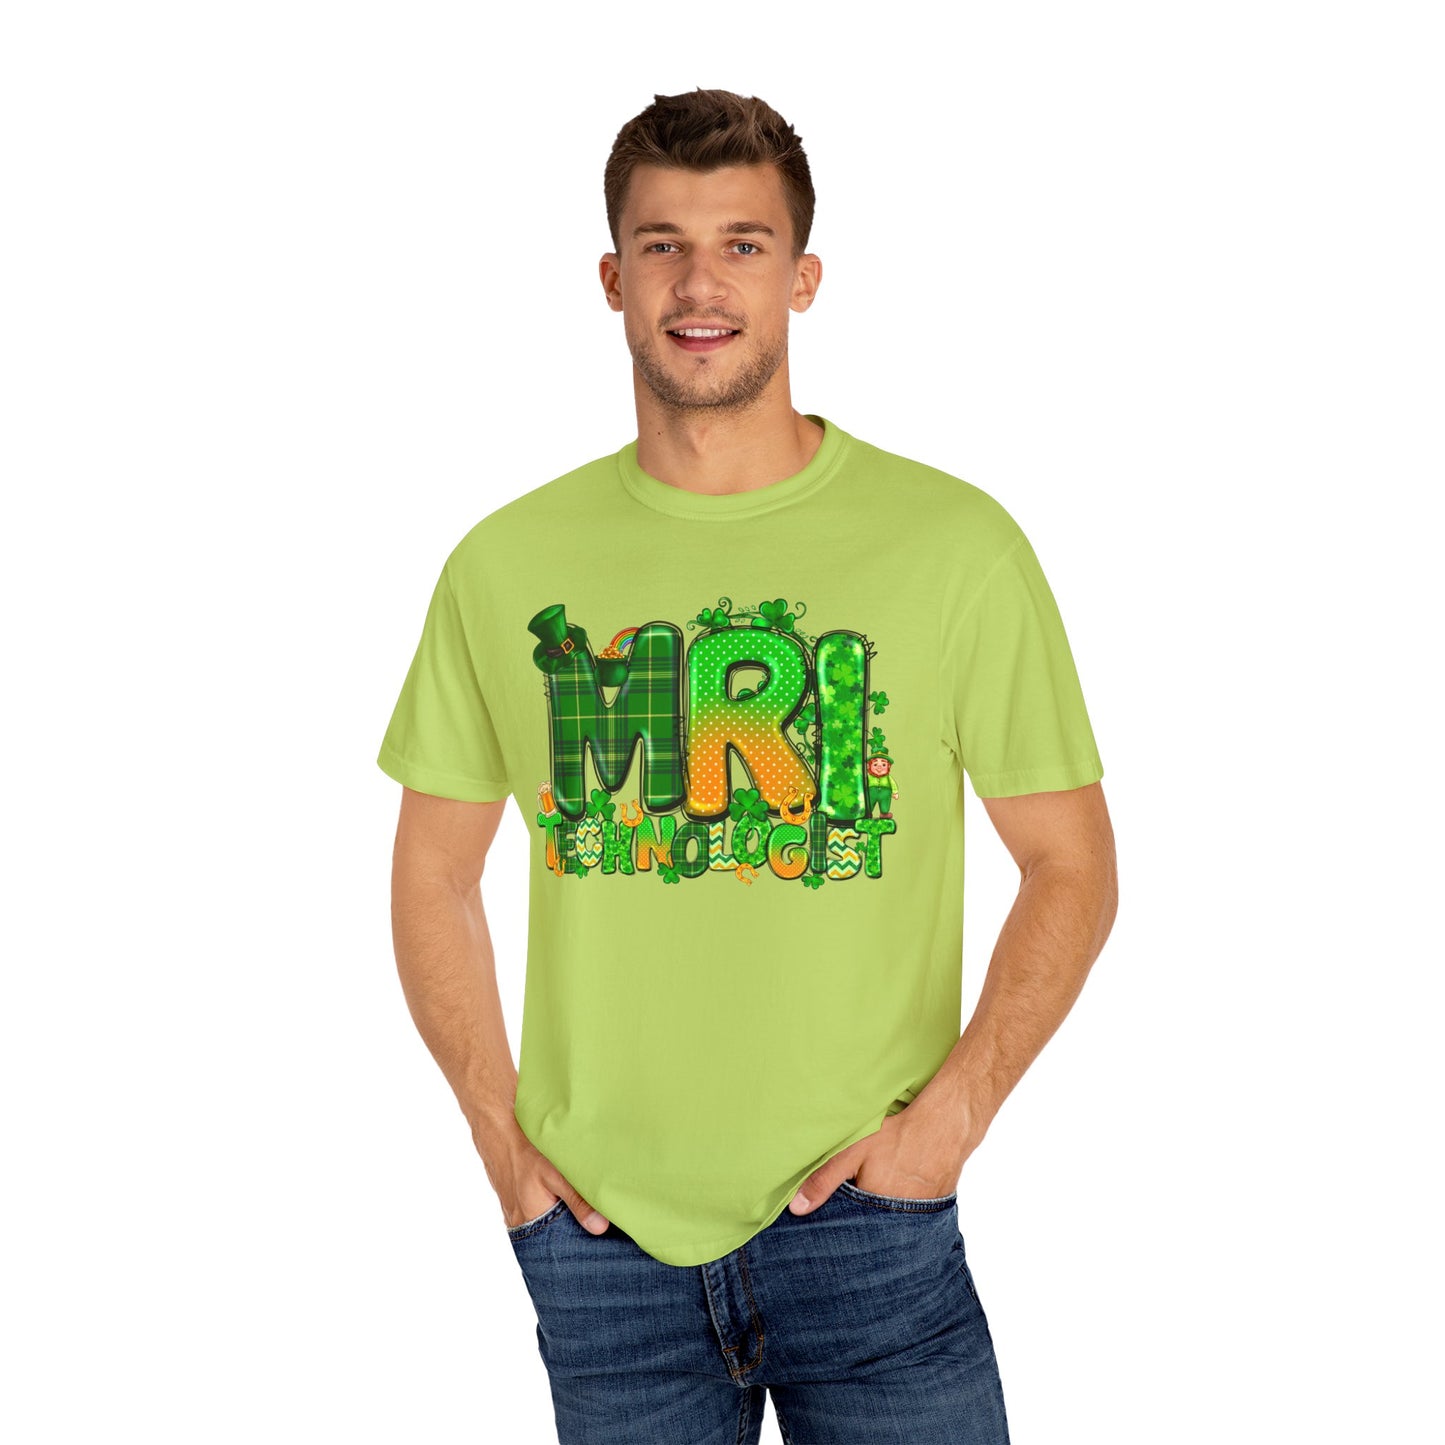 MRI Technologist St. Patrick’s Day Shirt Unisex Comfort Colors